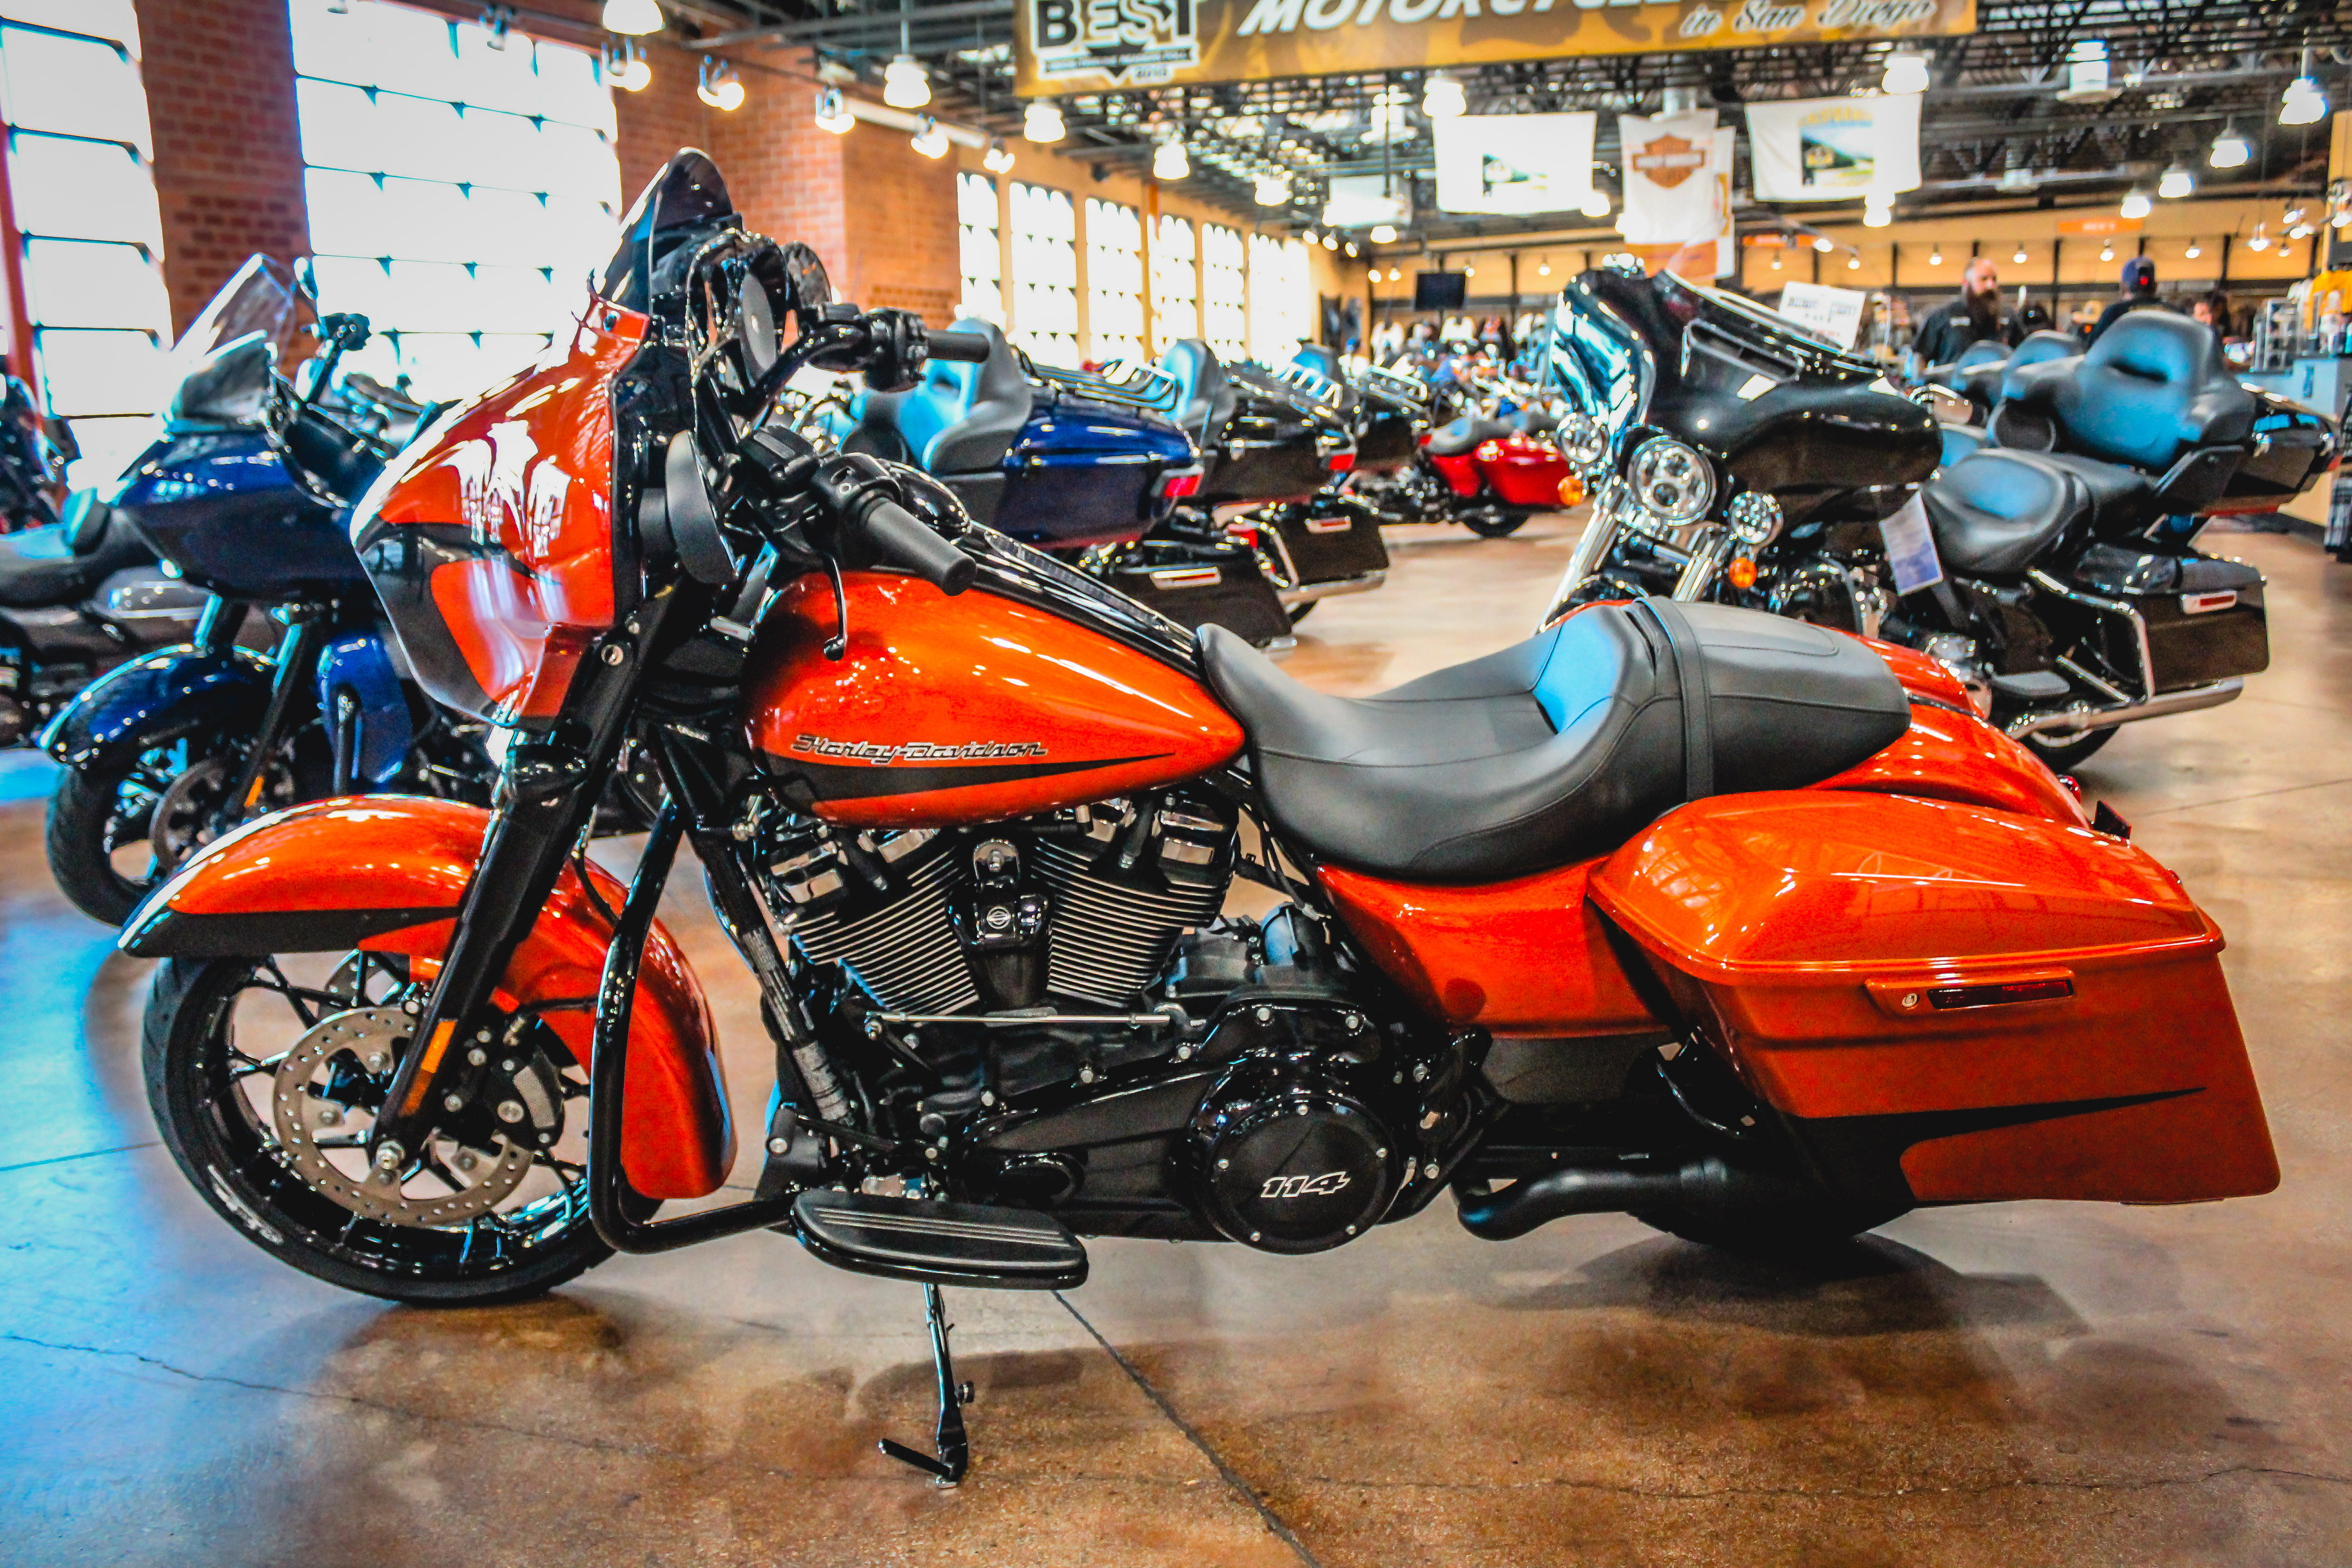 New 2020 Harley-Davidson Street Glide Special in El Cajon #HD620571